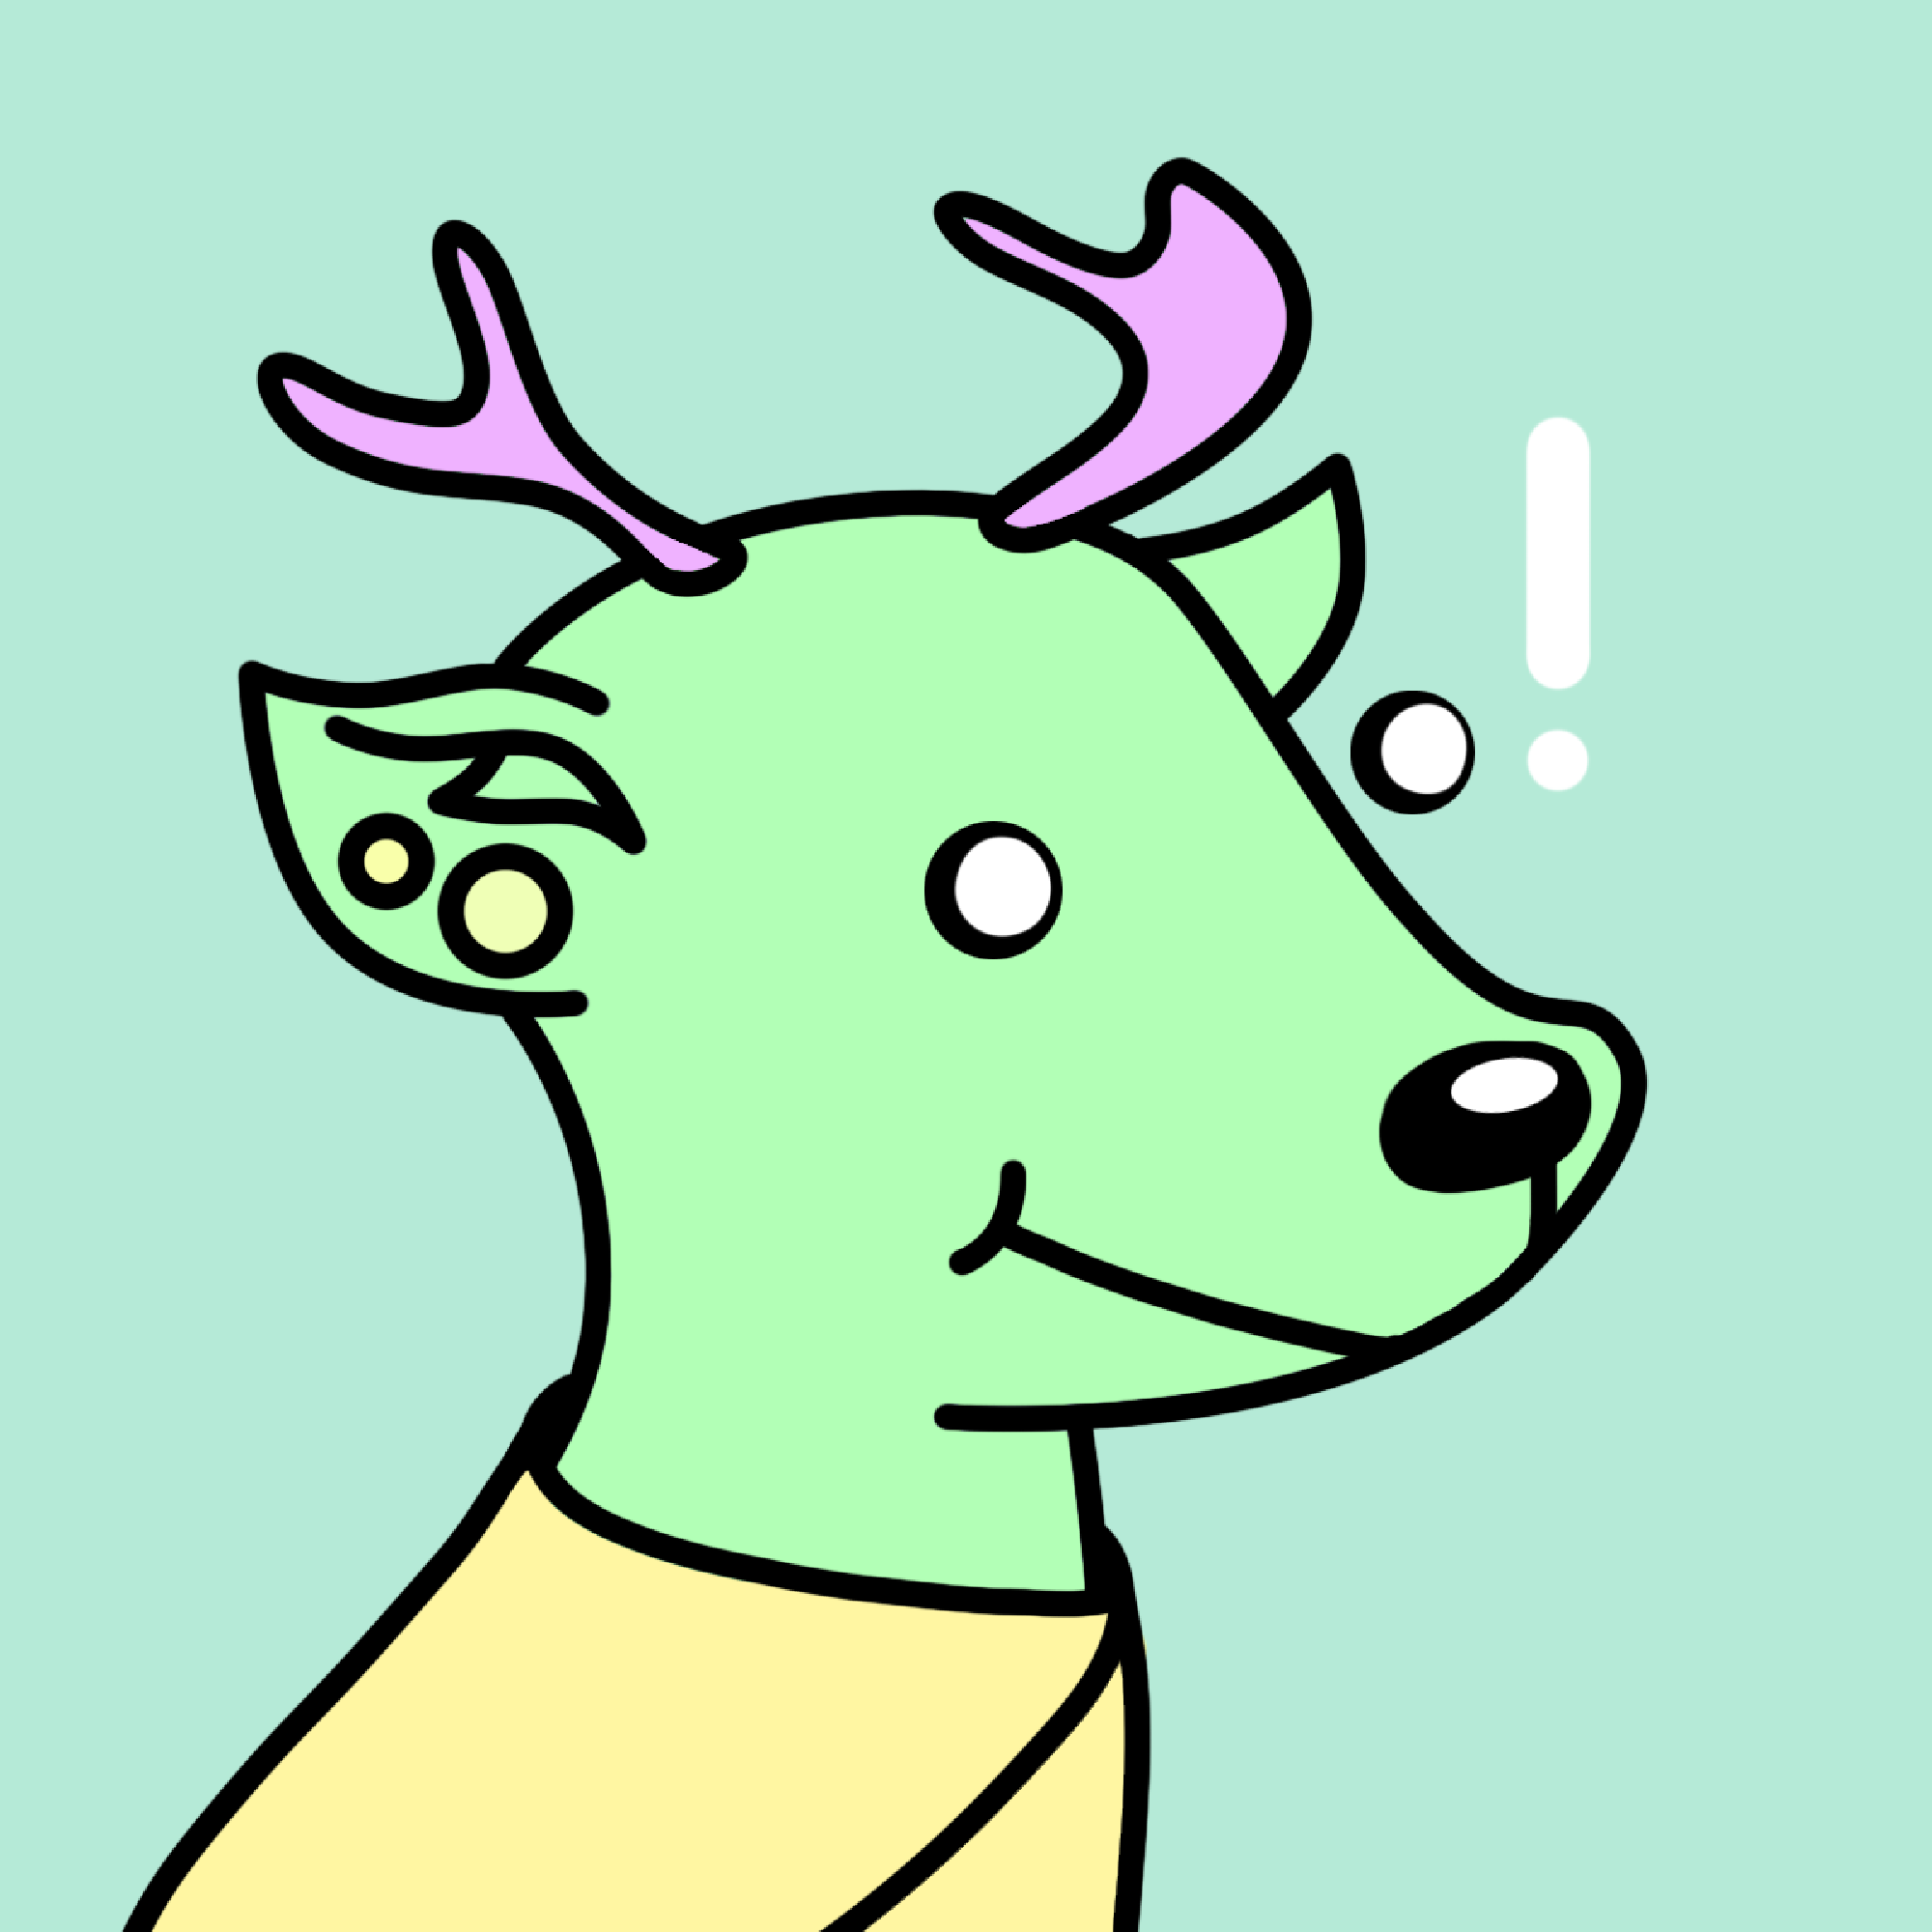 Doodled Deer#3806